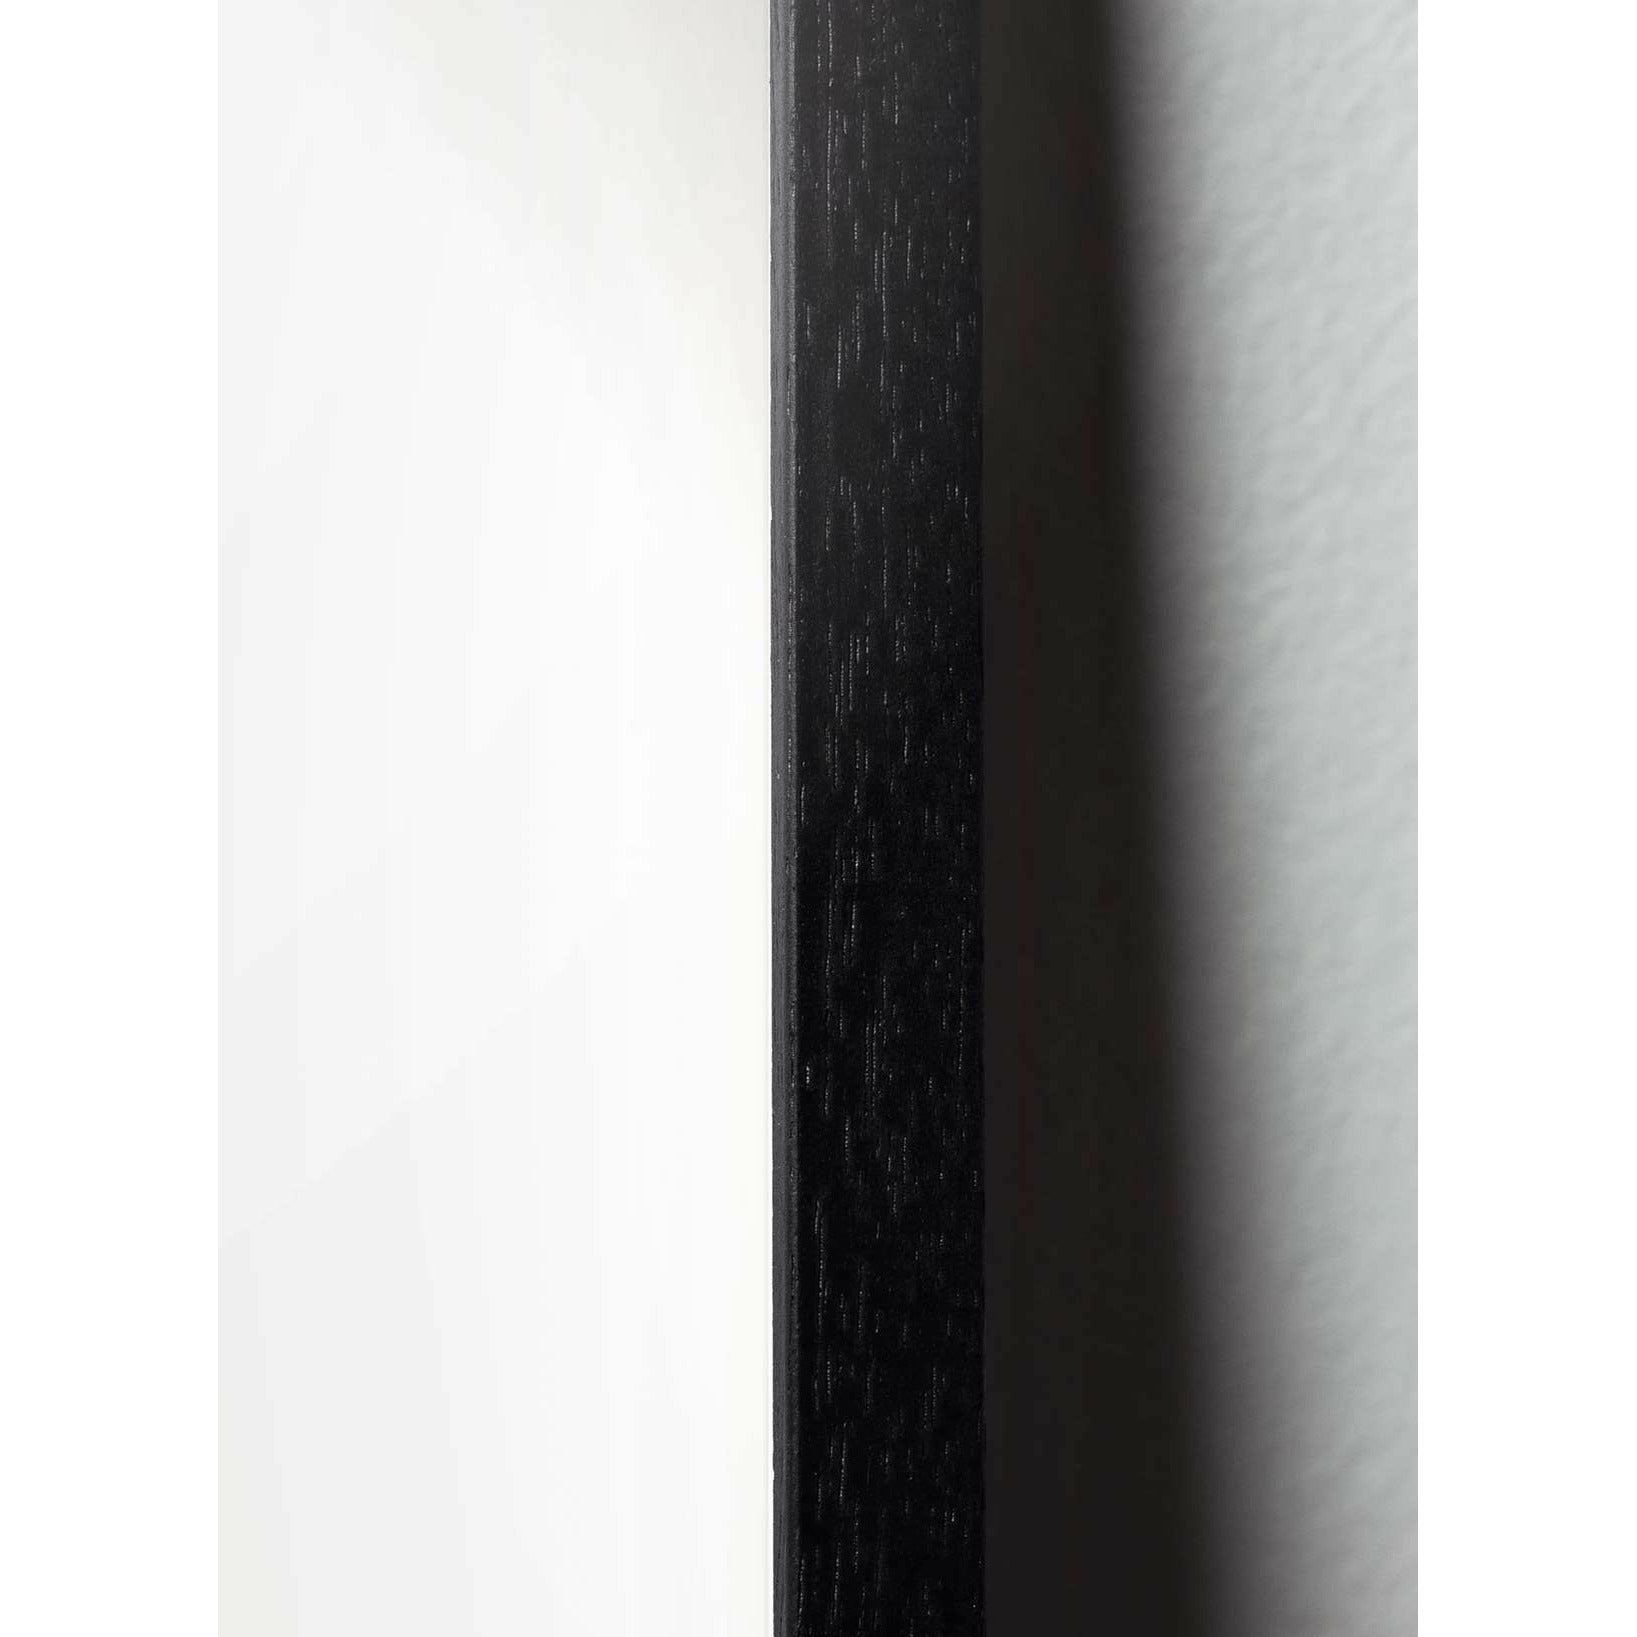 Brainchild Äggfiguraffisch, ram i svart -målat trä 50x70 cm, svart